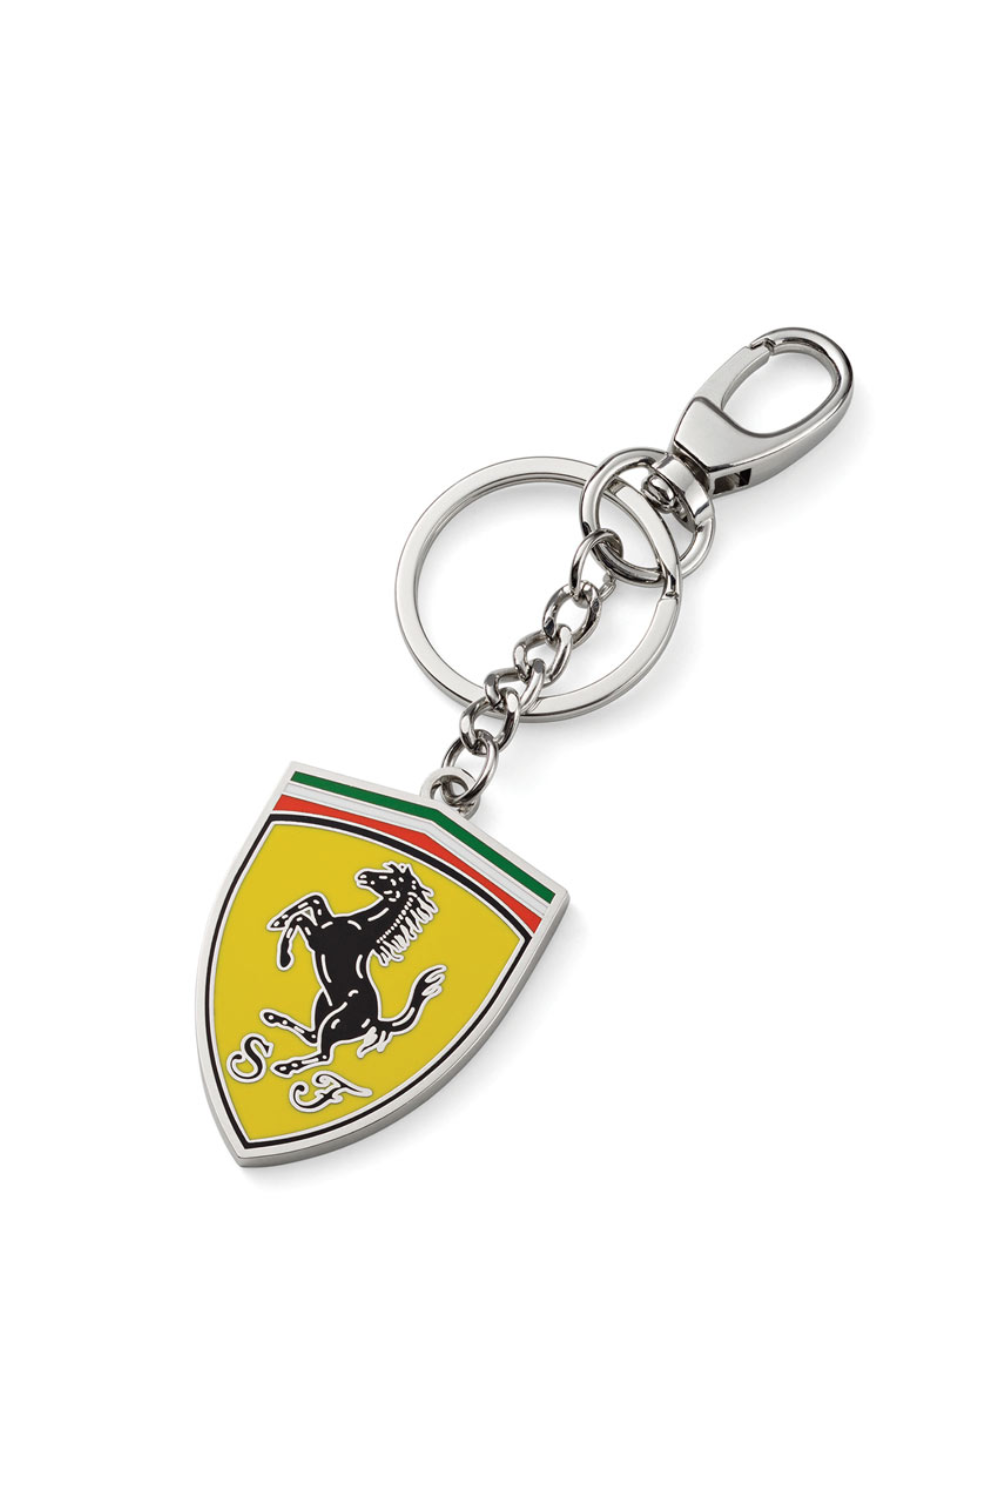 Porte-clés Logo Ferrari Scuderia Ferrari Formula 1 Team Officiel